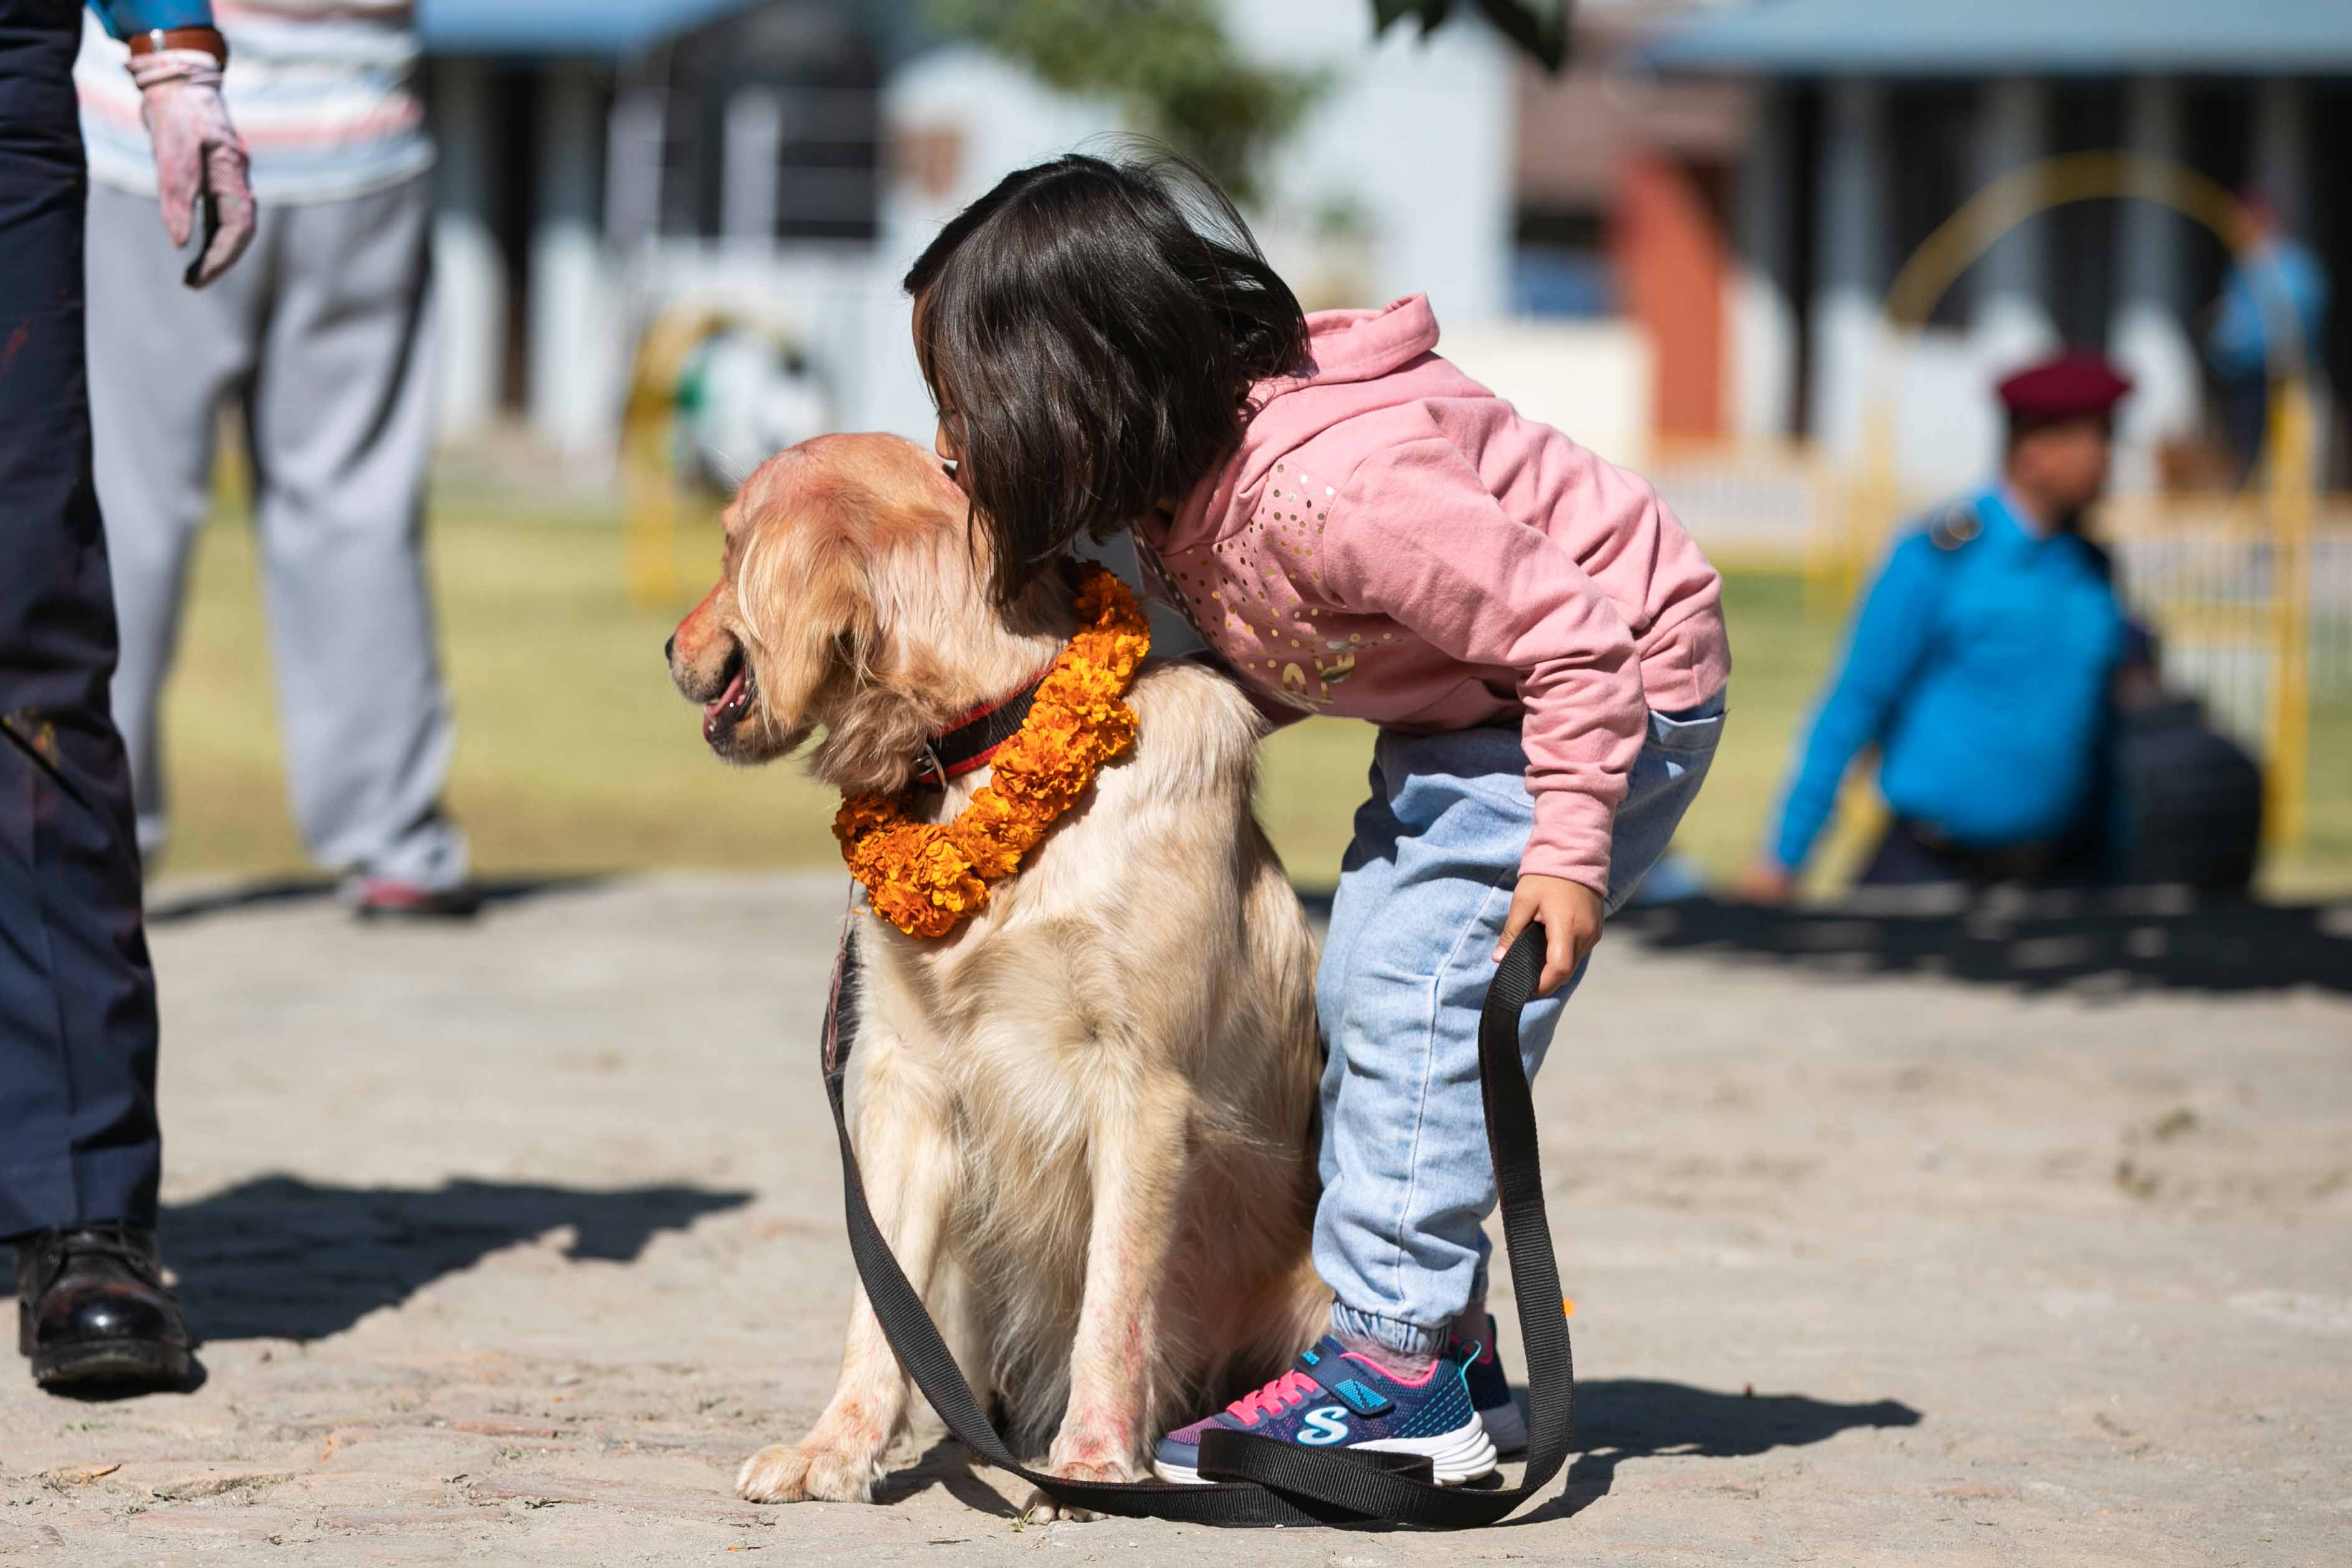 Nepal police dog festival-Nepal Photo Library  (3)1666603817.JPG